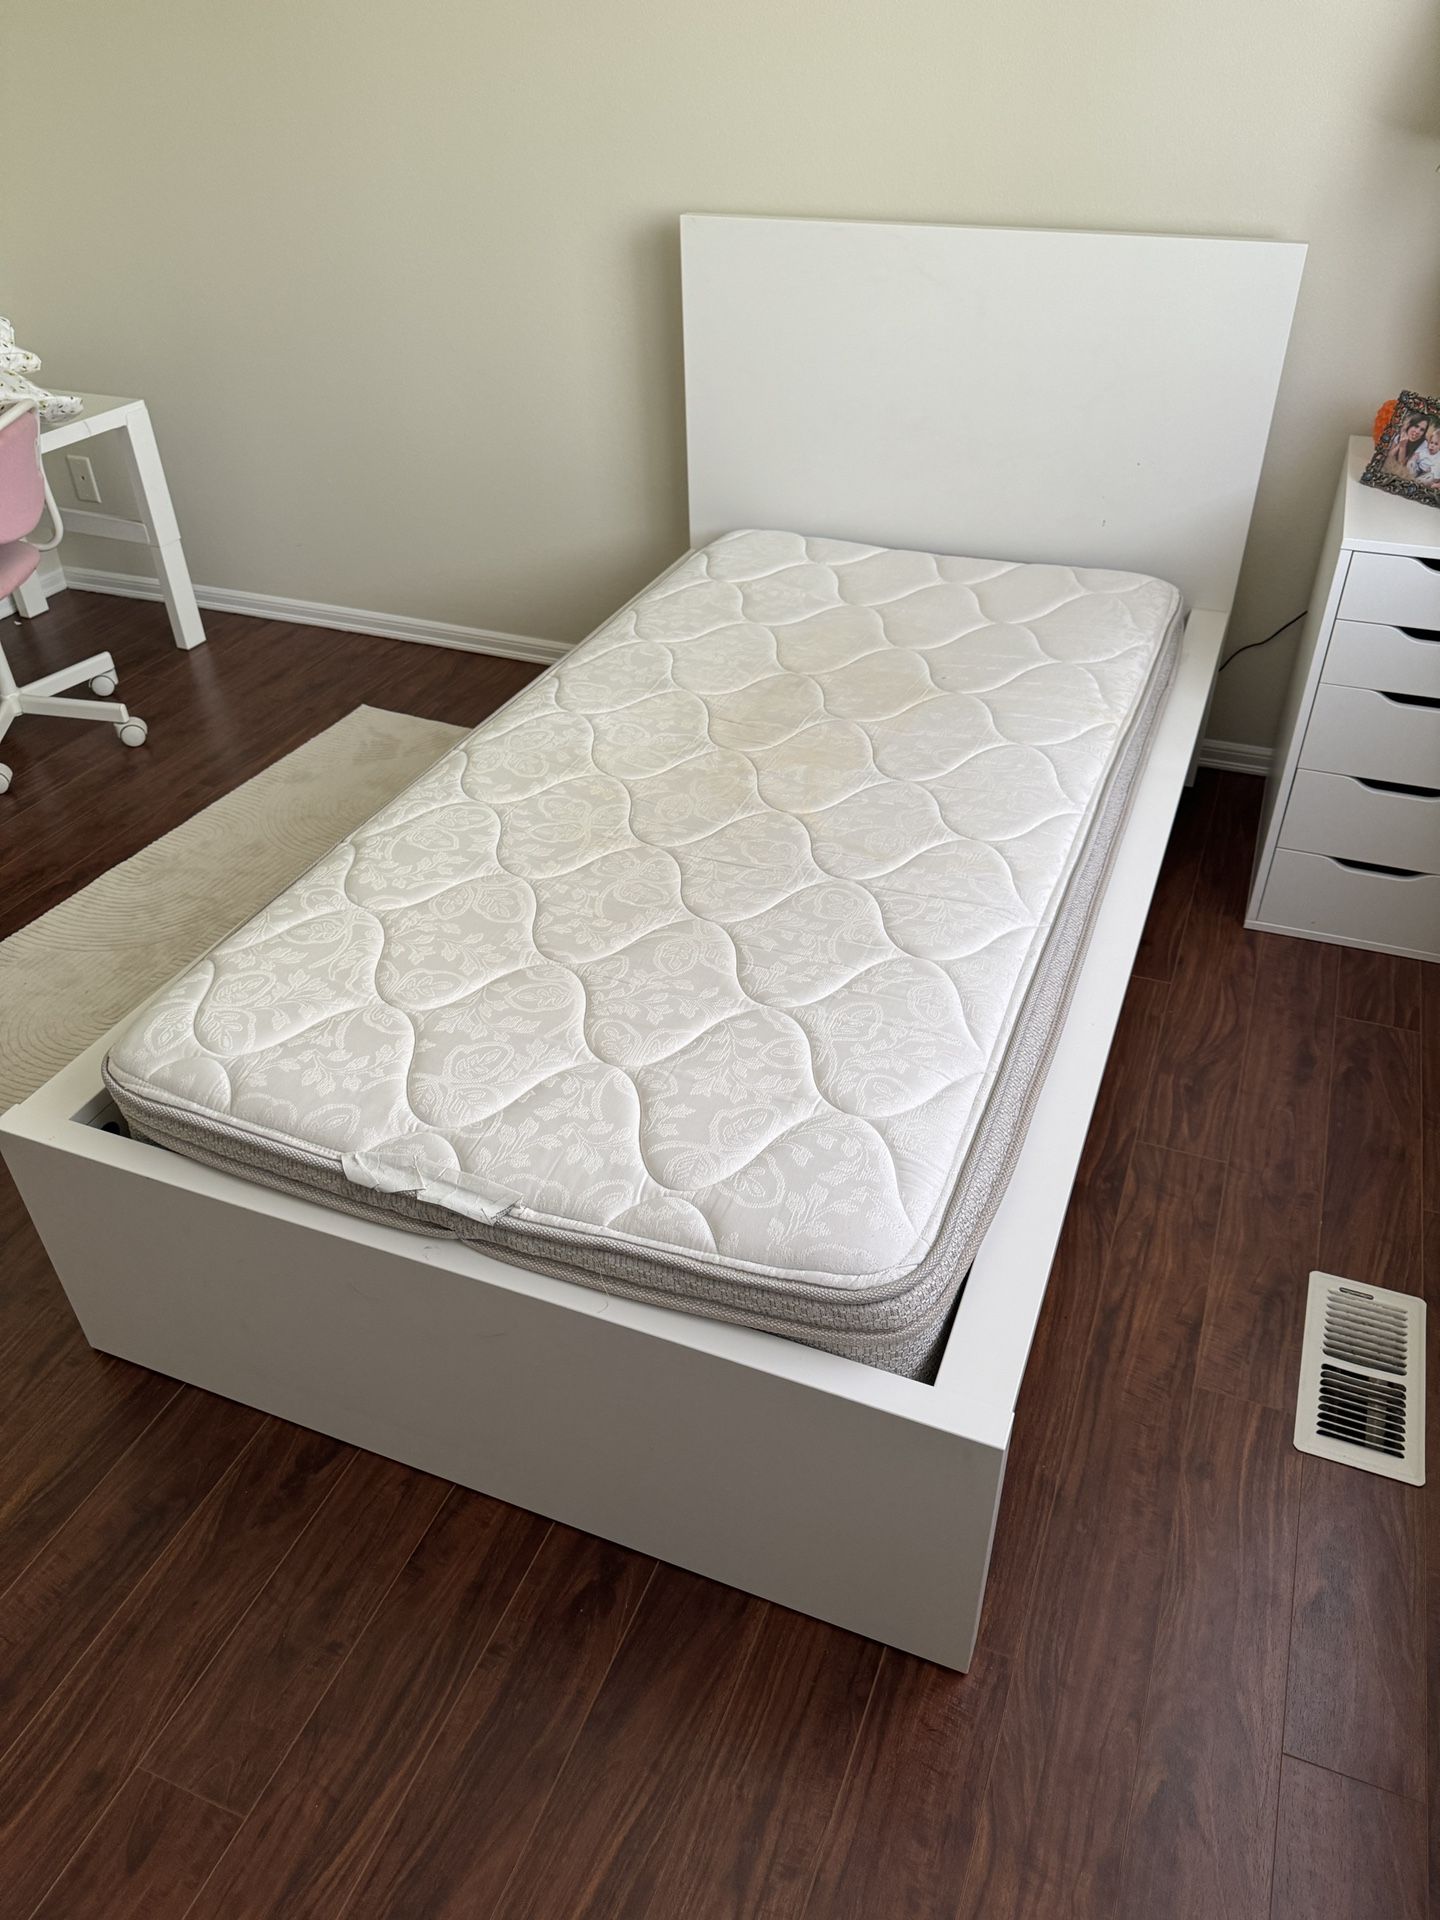 IKEA Twin Size Bed & Mattress 